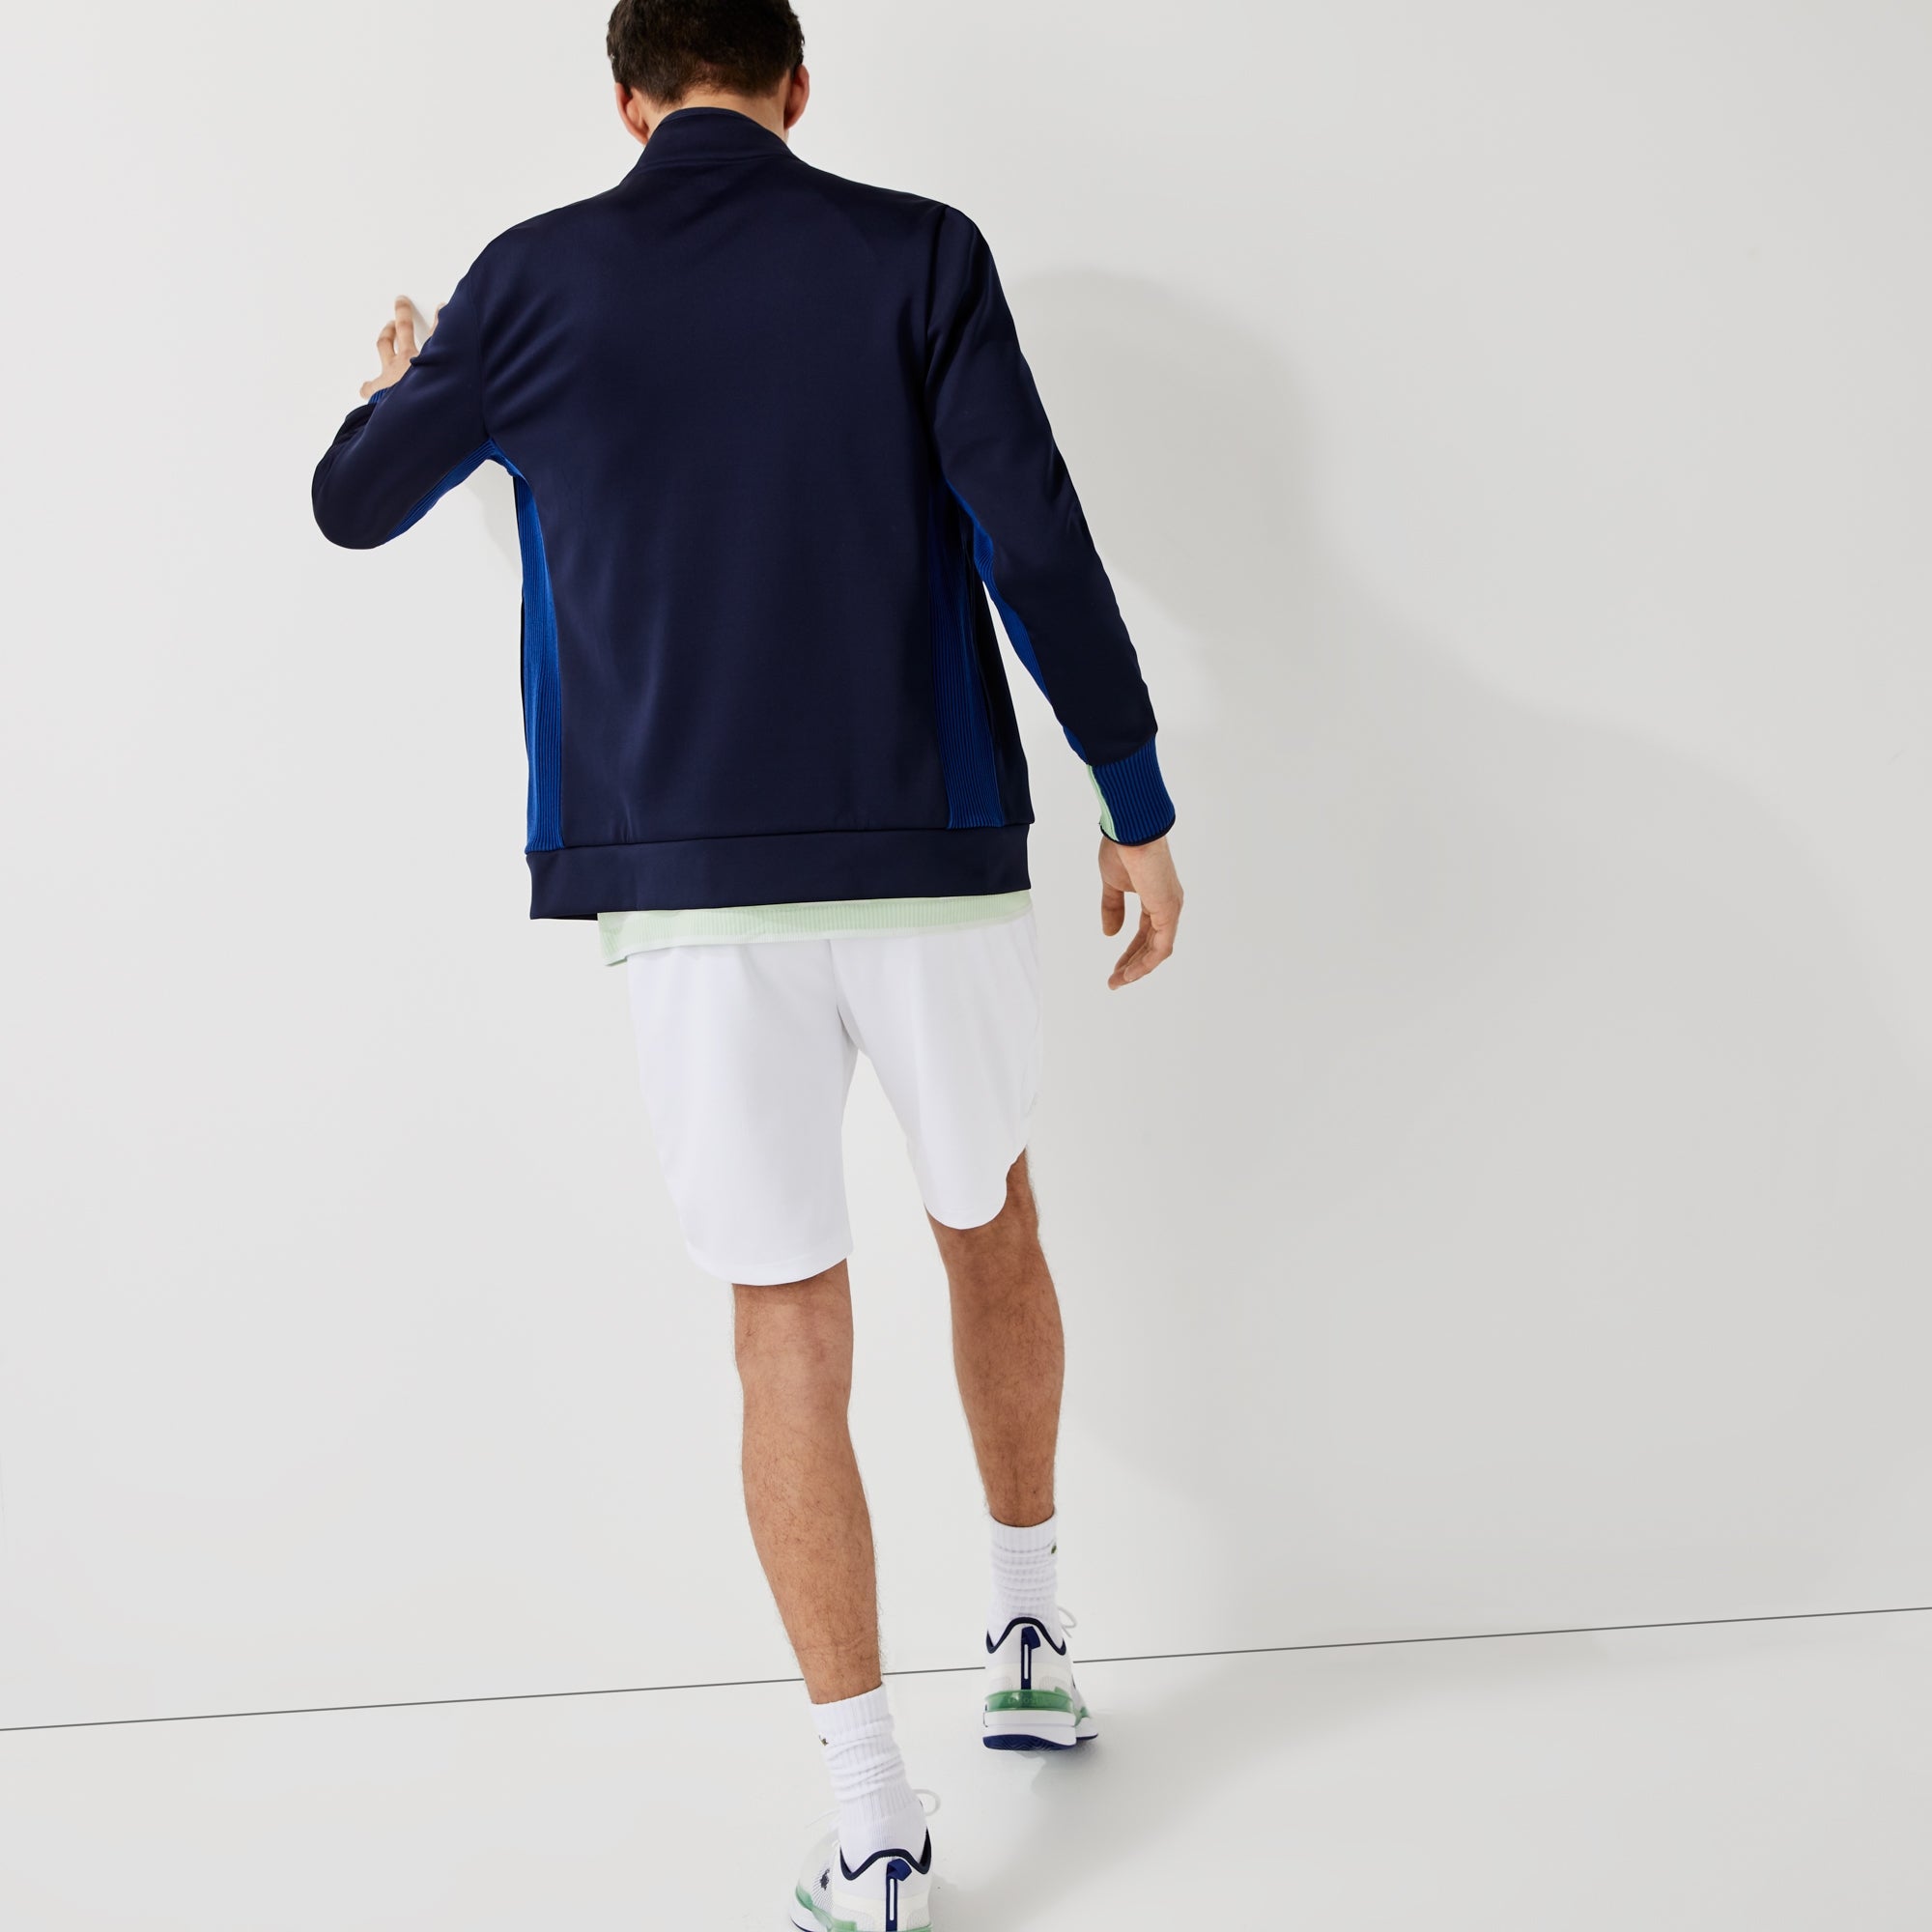 Lacoste Men's Tennis Jacket Blue (2)